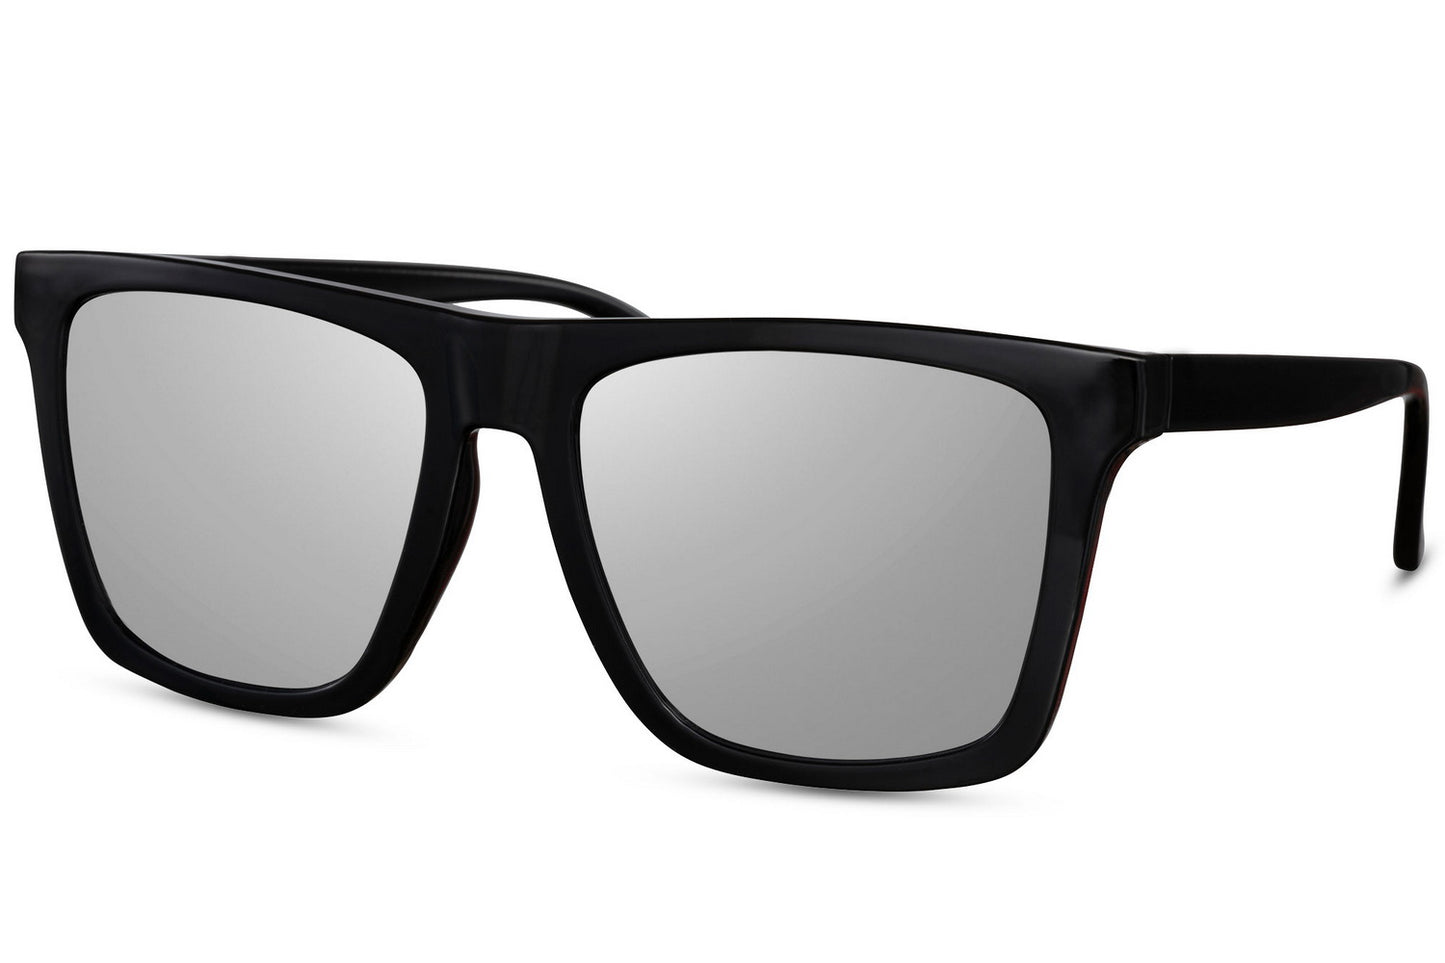 Silver Color Oversized Wayfarer Sunglasses